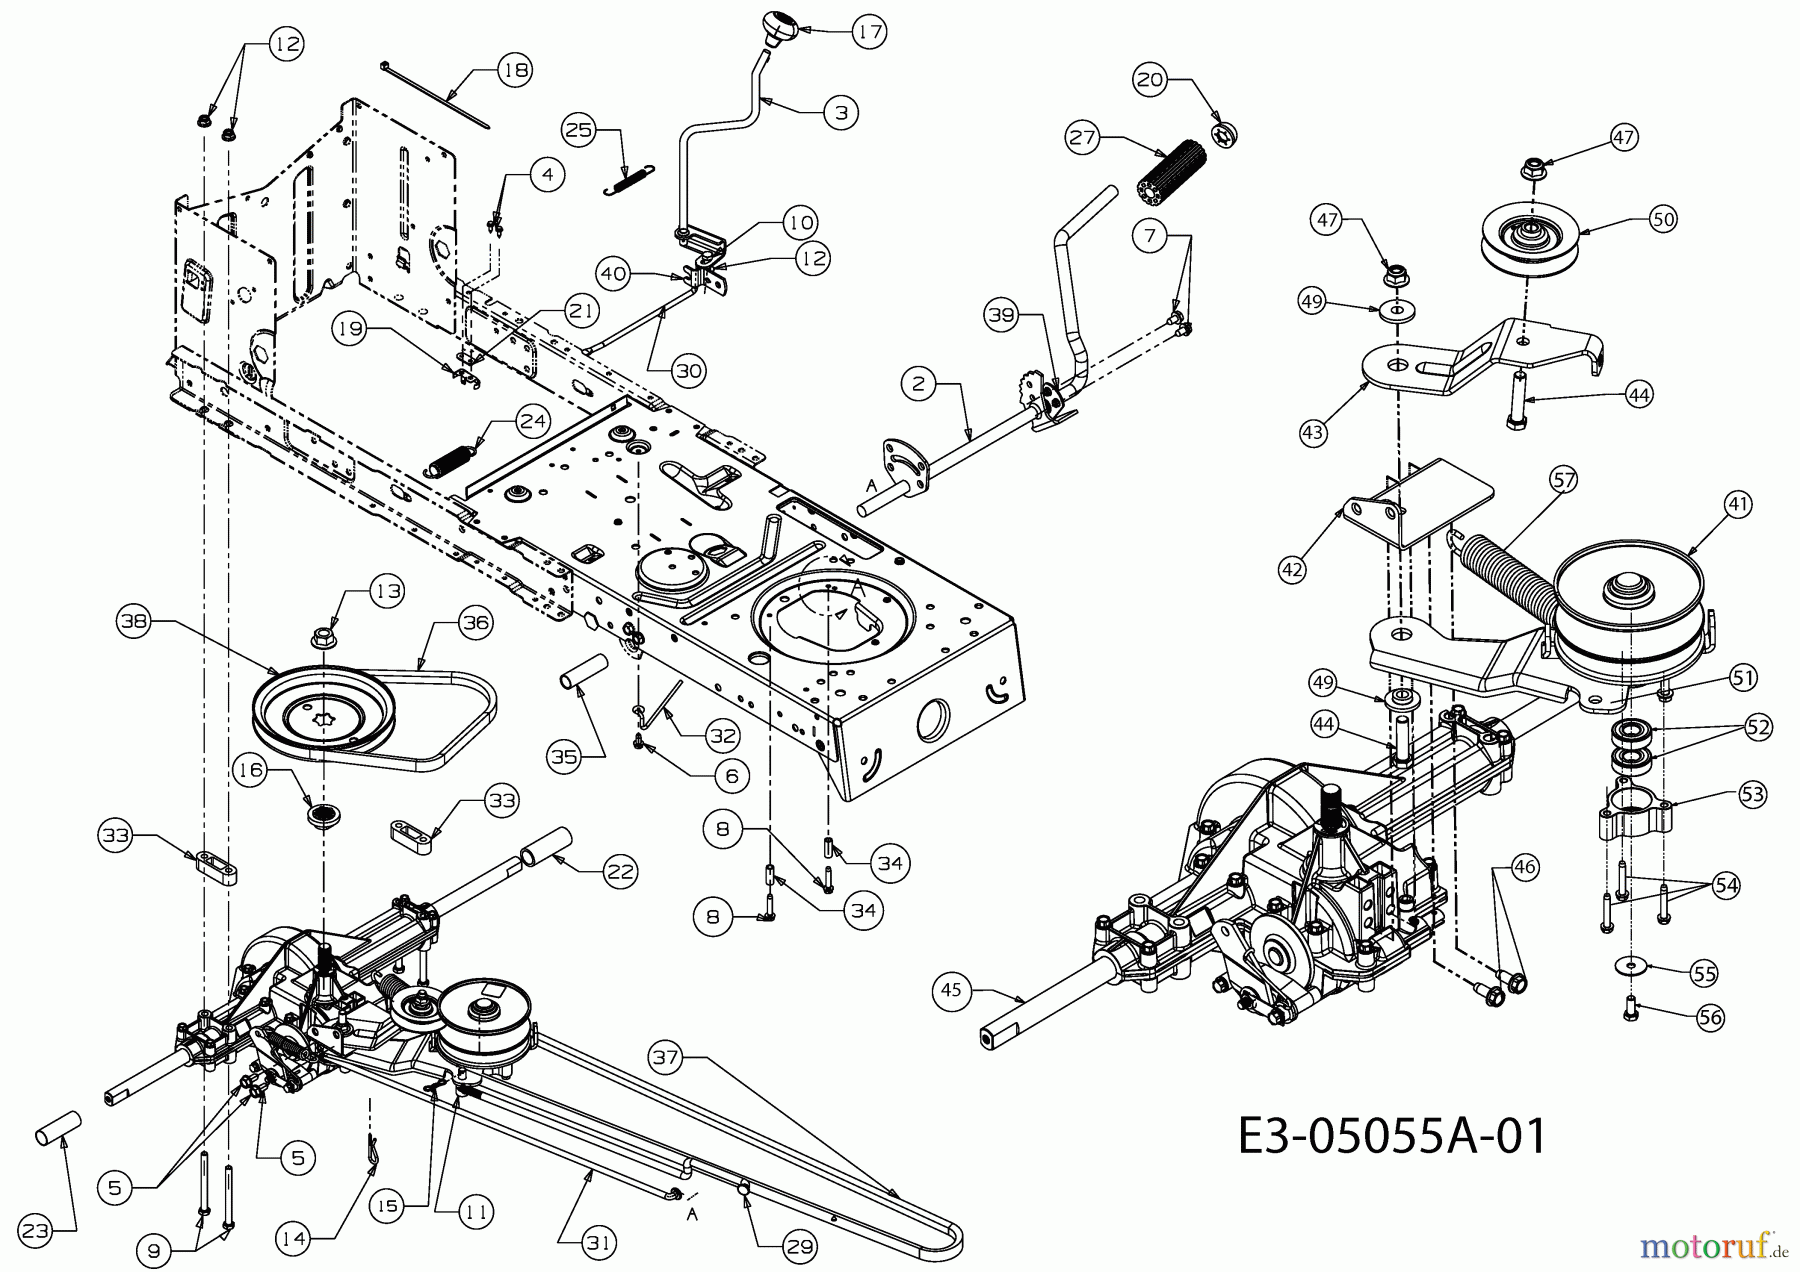  Sunline Lawn tractors RTS 115/96-B 13AH761F685  (2010) Drive system, Pedals